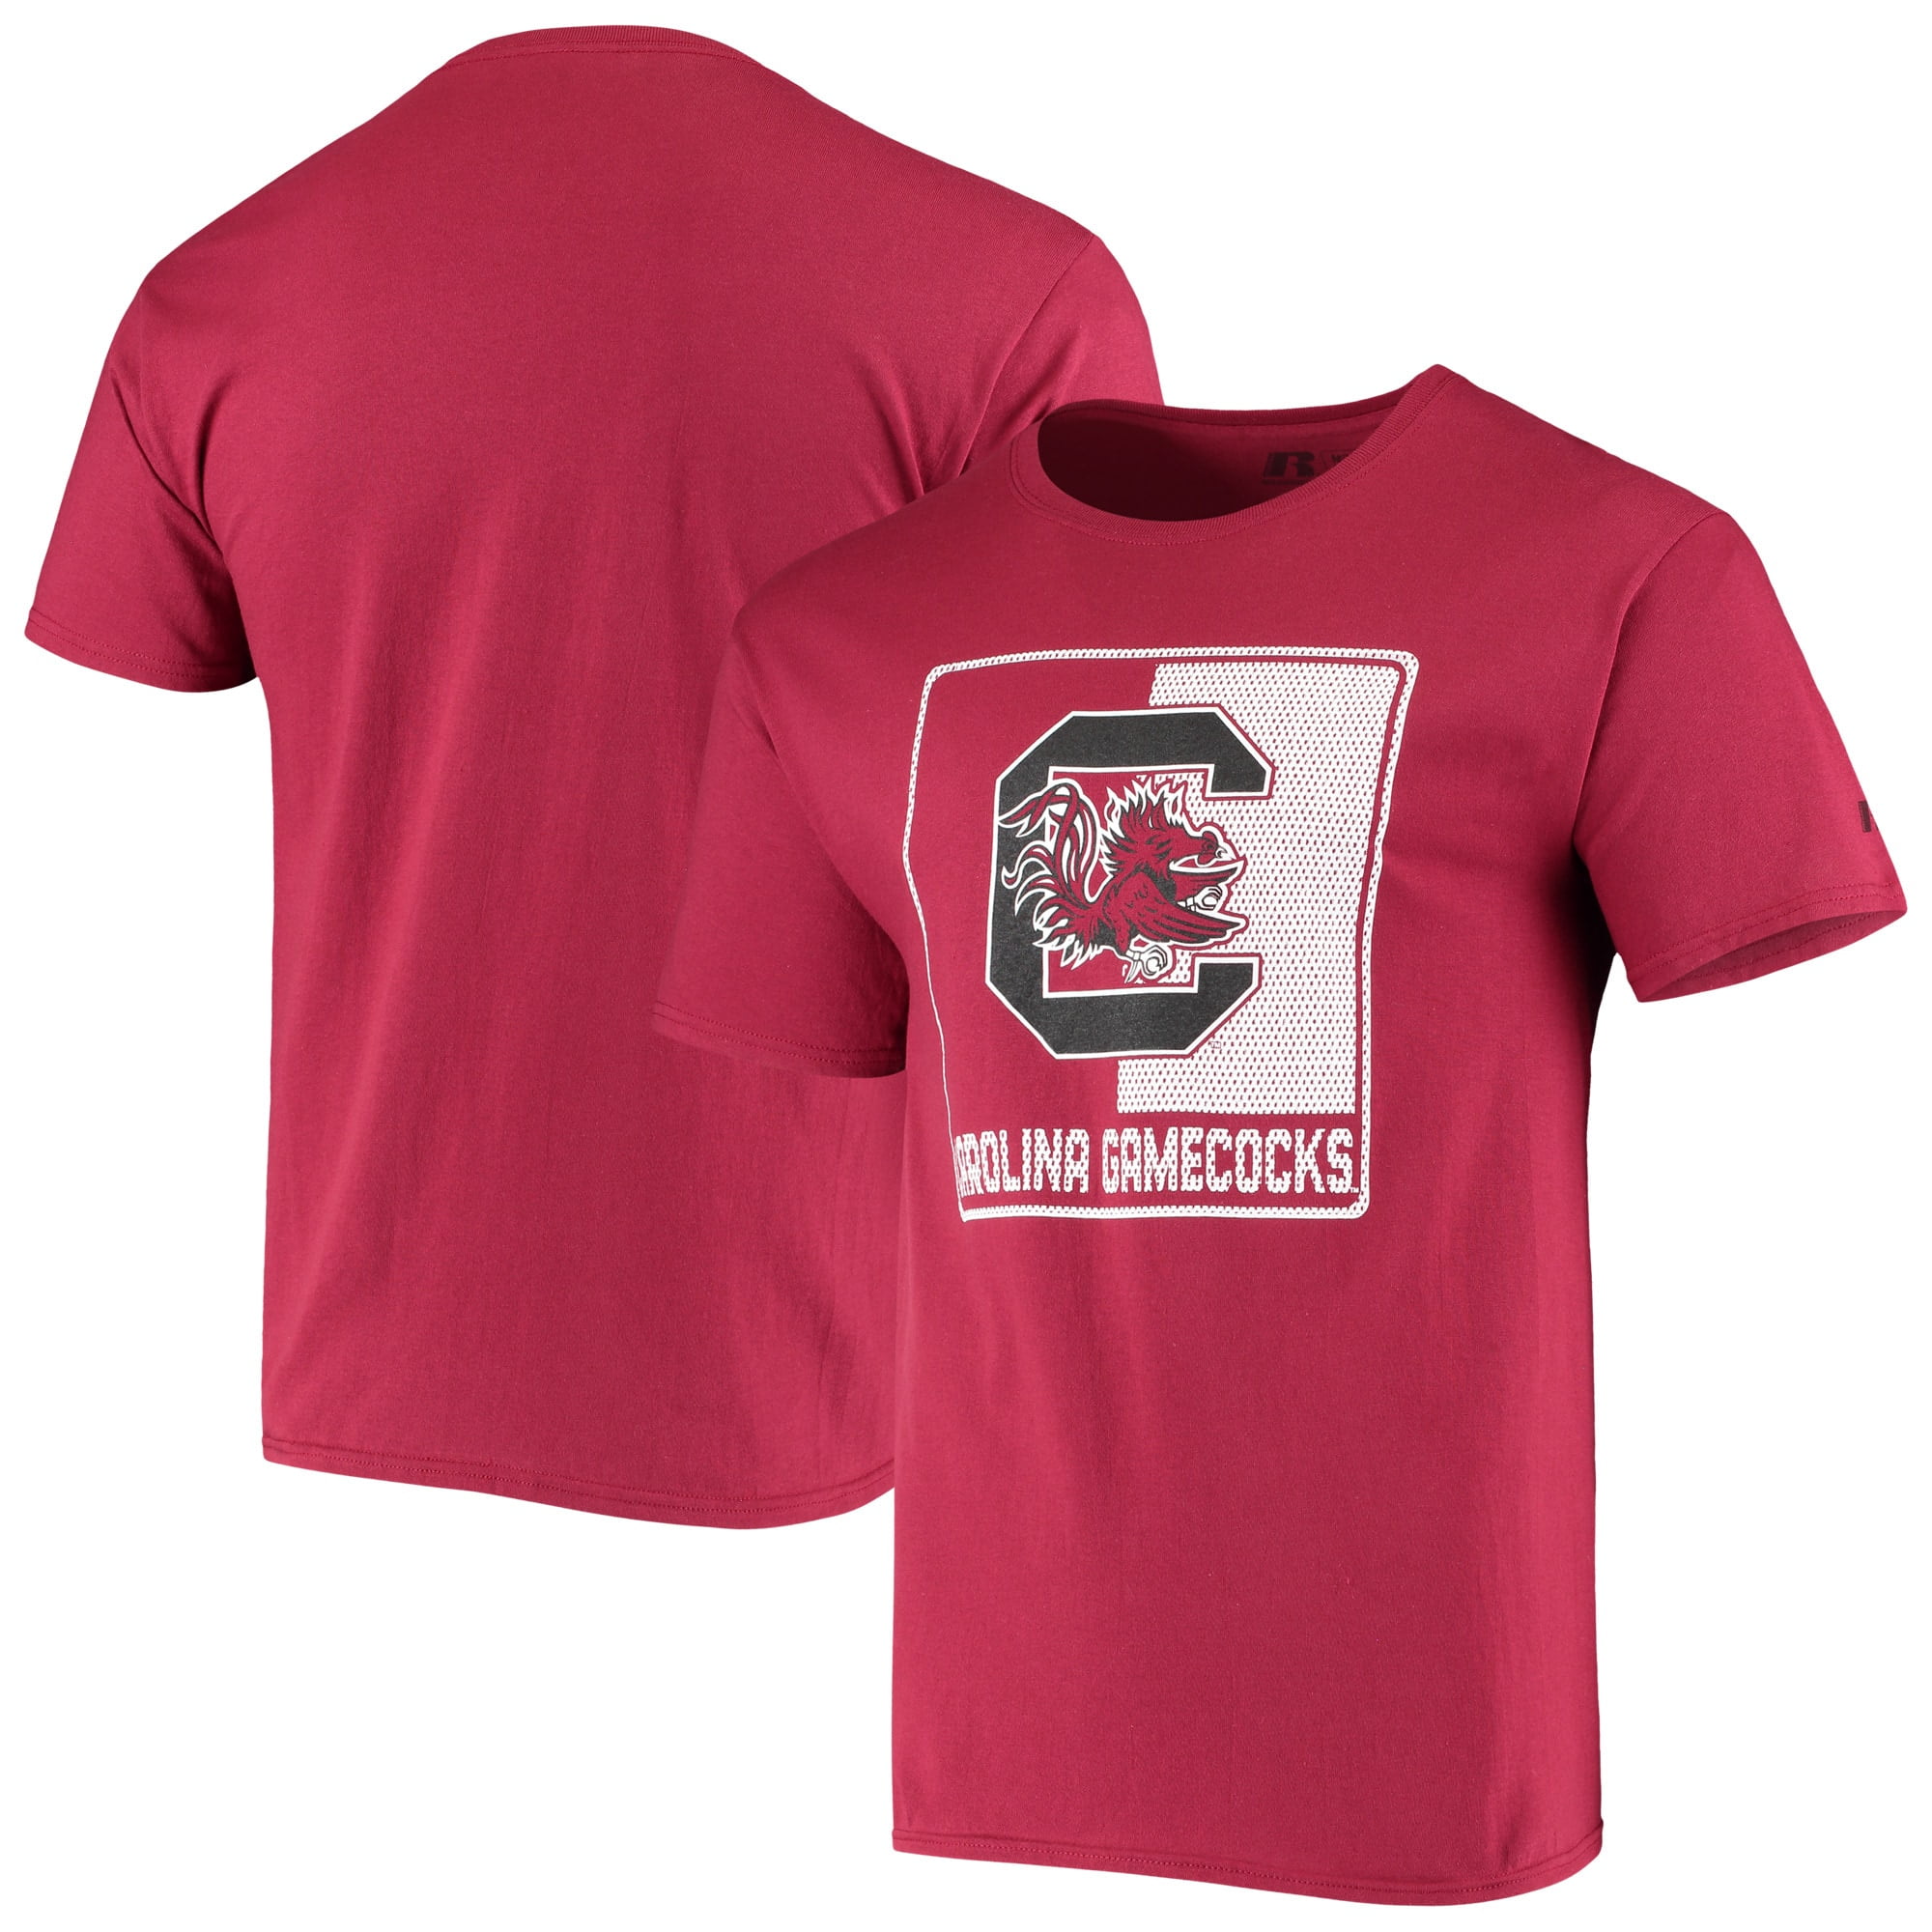 NCAA South Carolina GameCocks T-Shirt Hardwood Star College University 